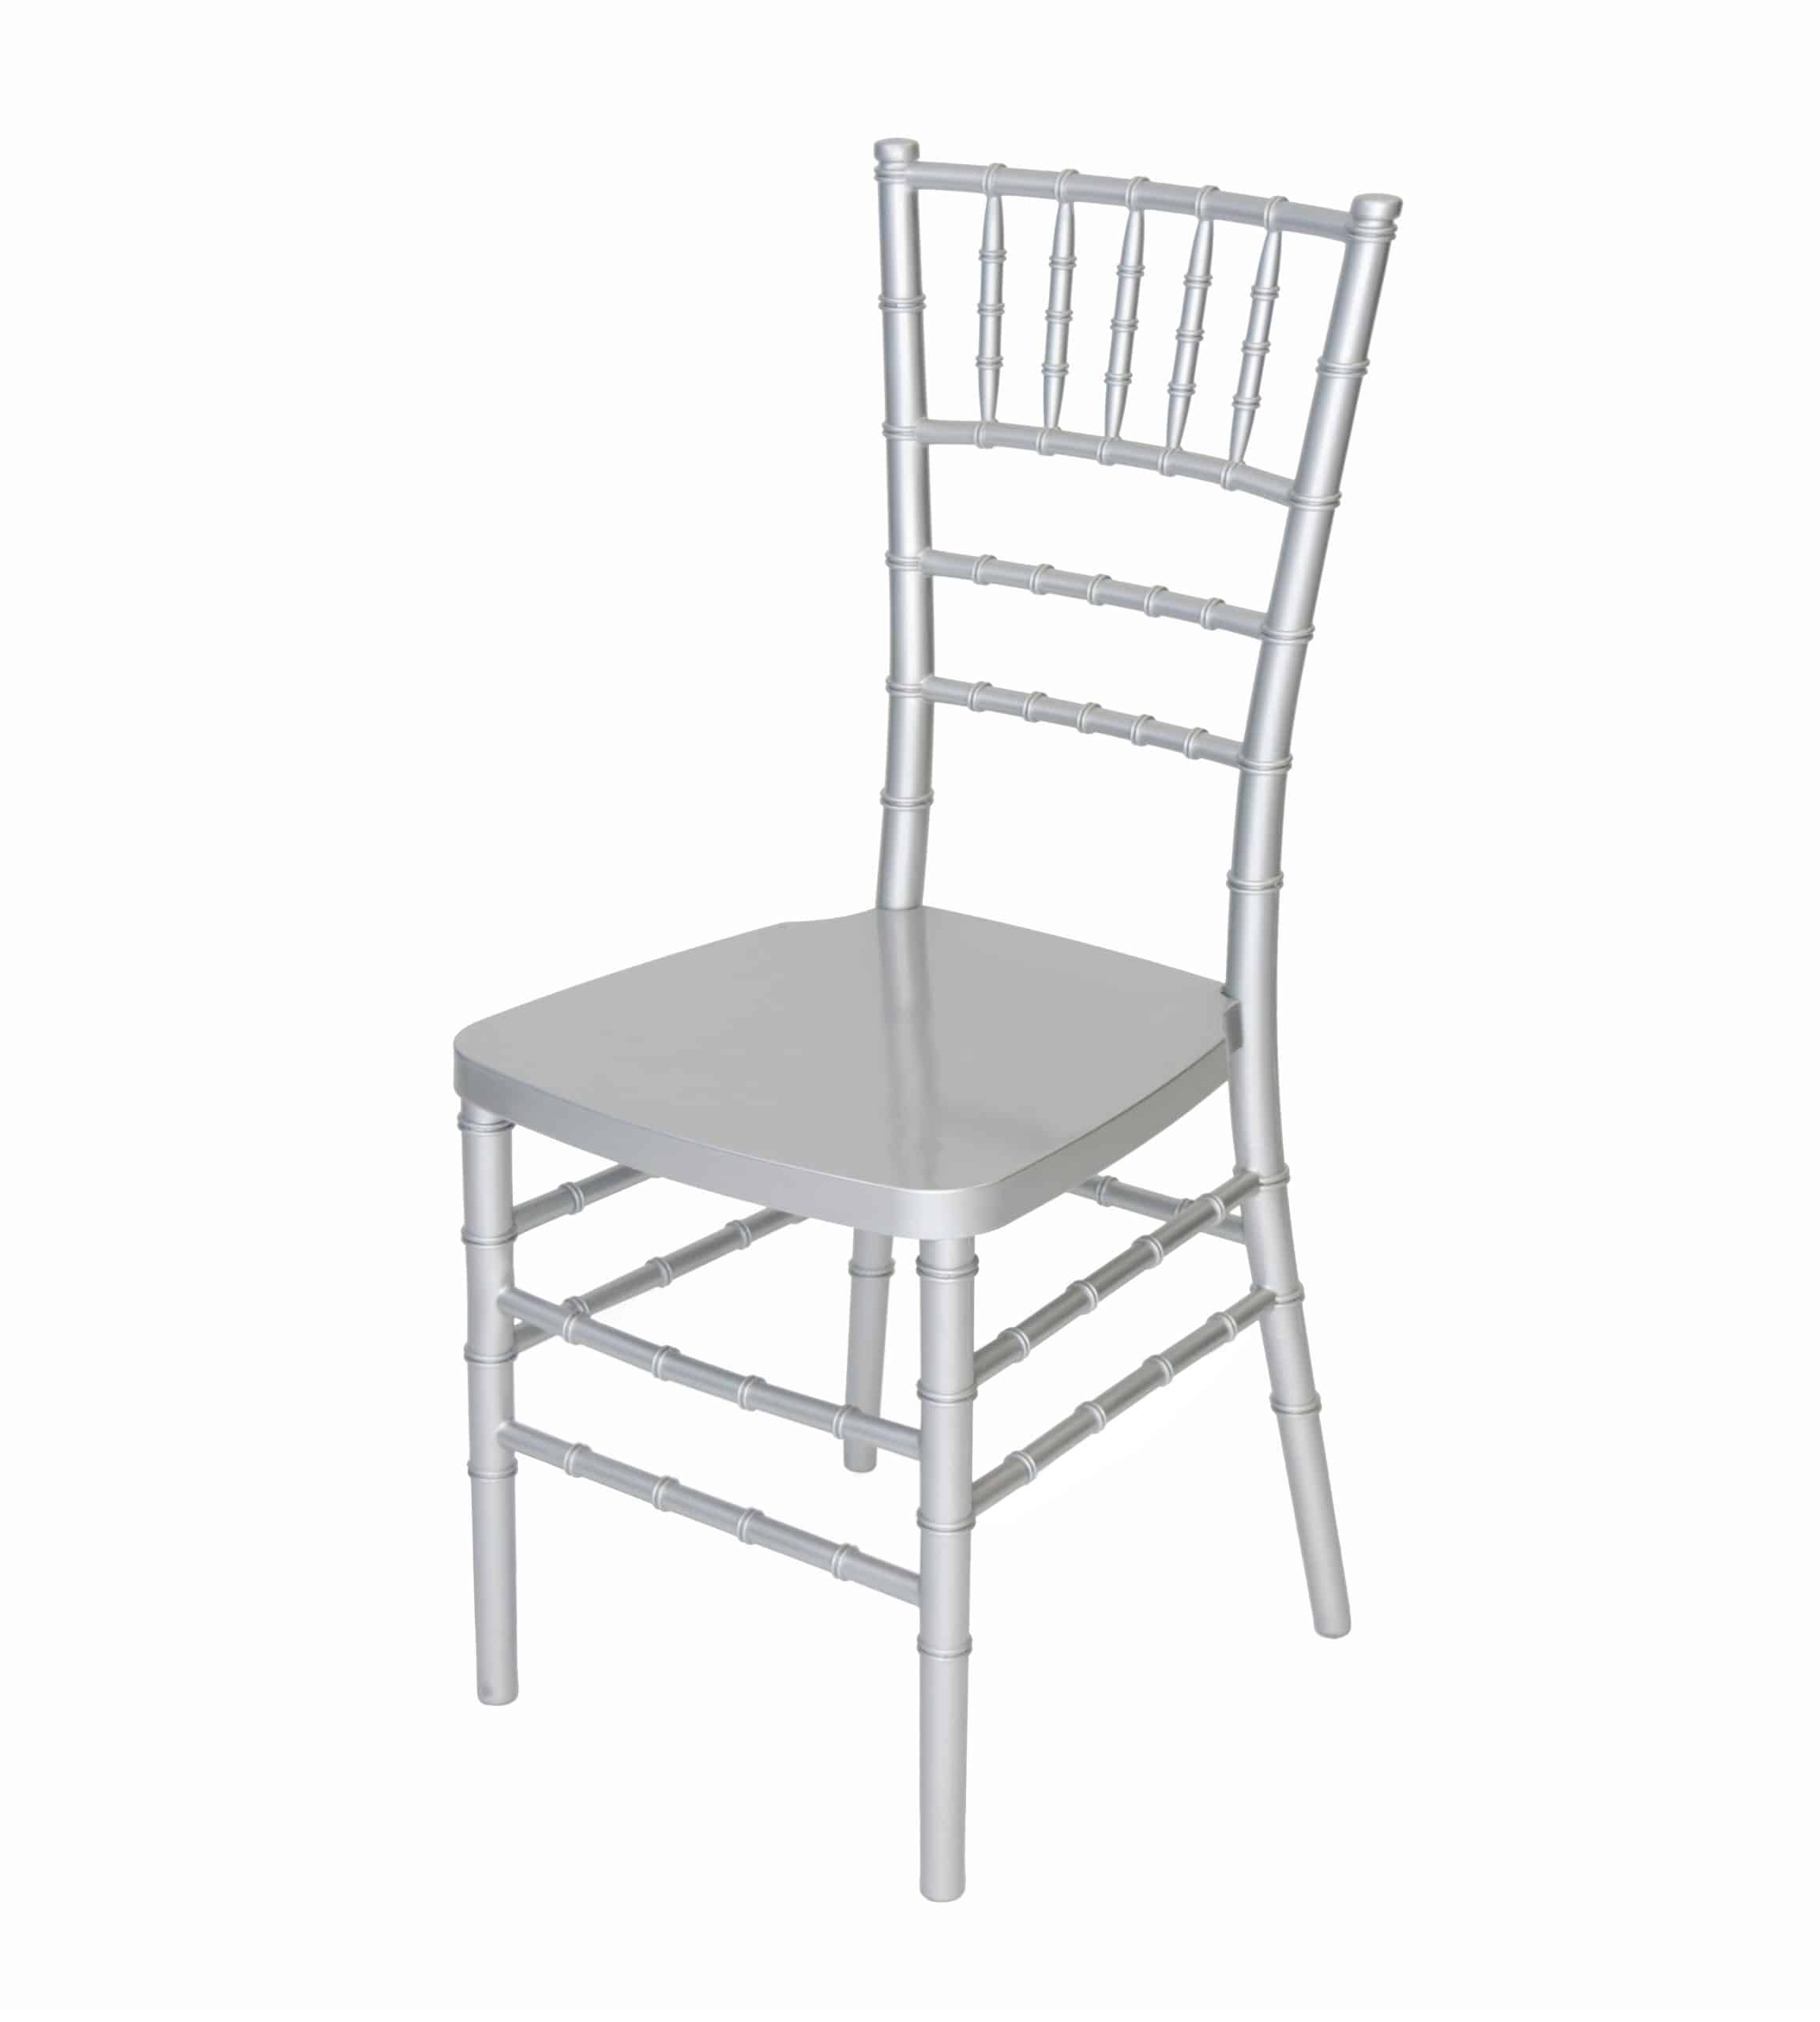 Black Chiavari Chair:Cushion Included - Table & Chair Rentals in